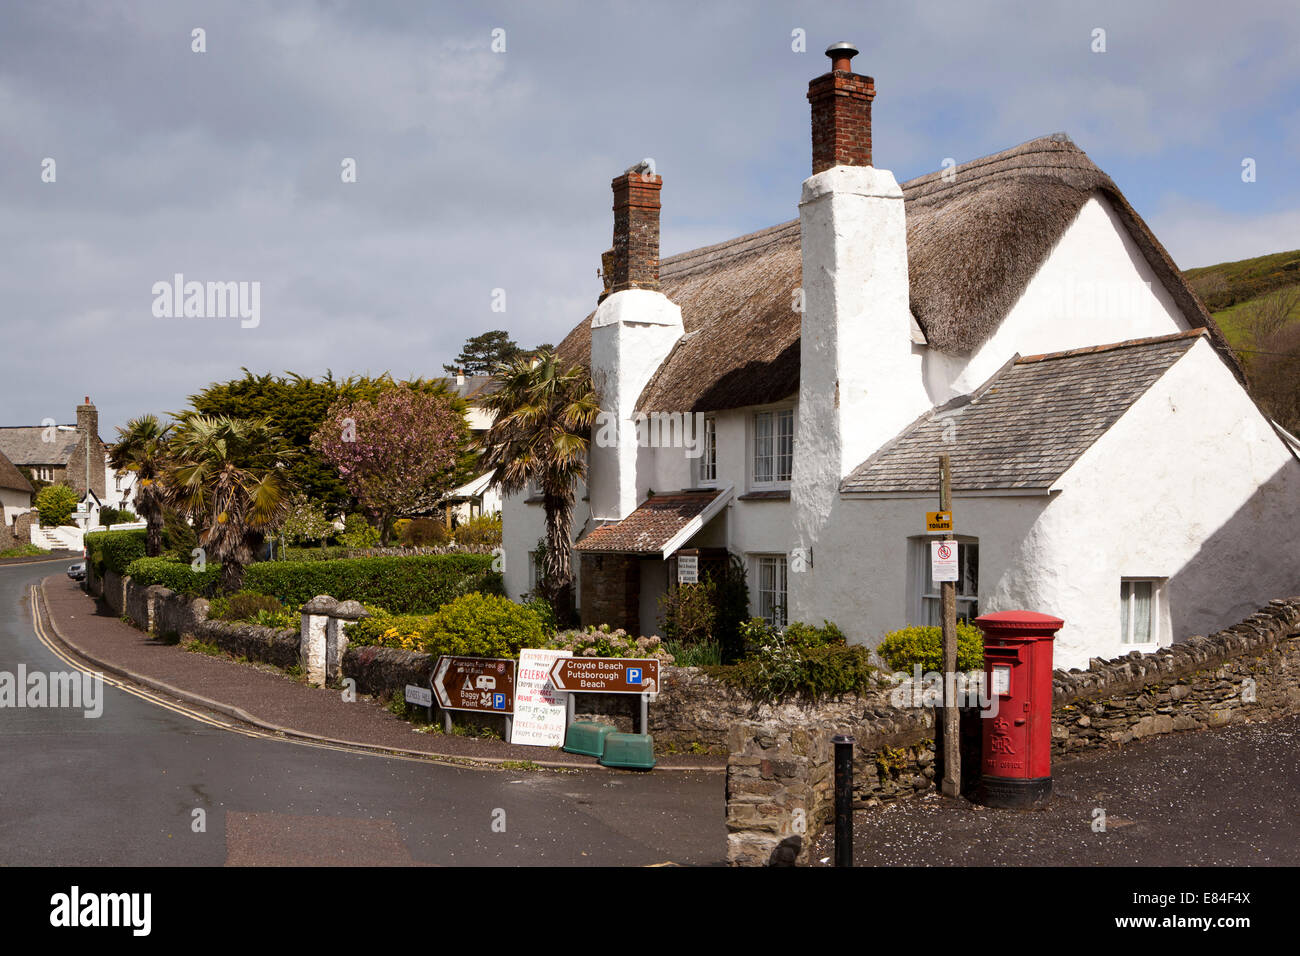 UK, England, Devon, Croyde village, Bridge Farm B&B traditional thatched cob house Stock Photo